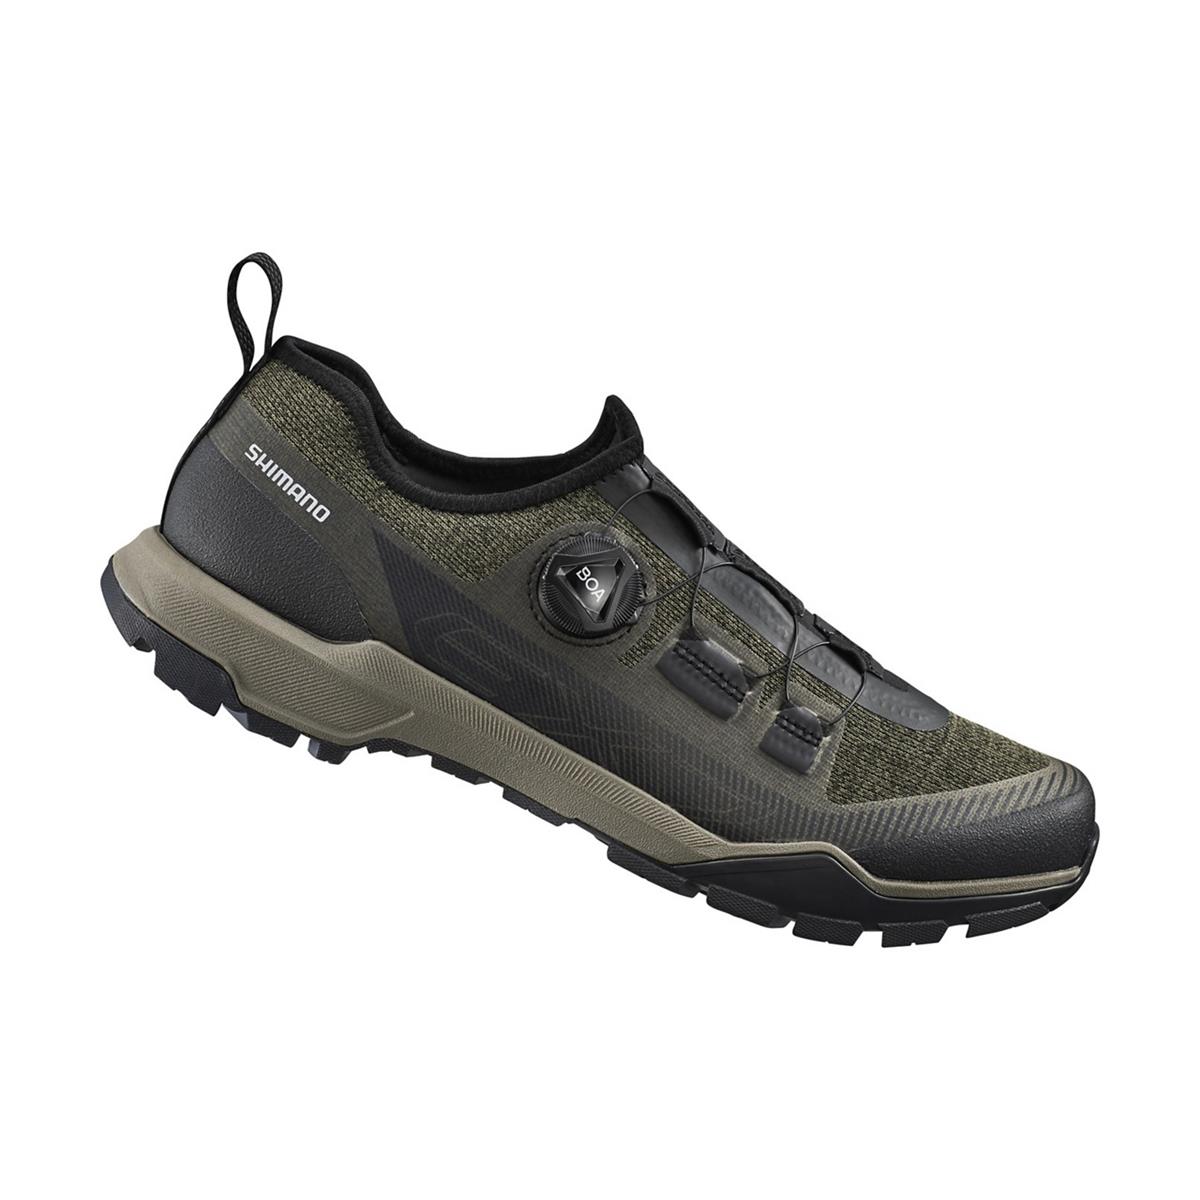 Trekking / MTB Shoes SH-EX700 Green Size 42